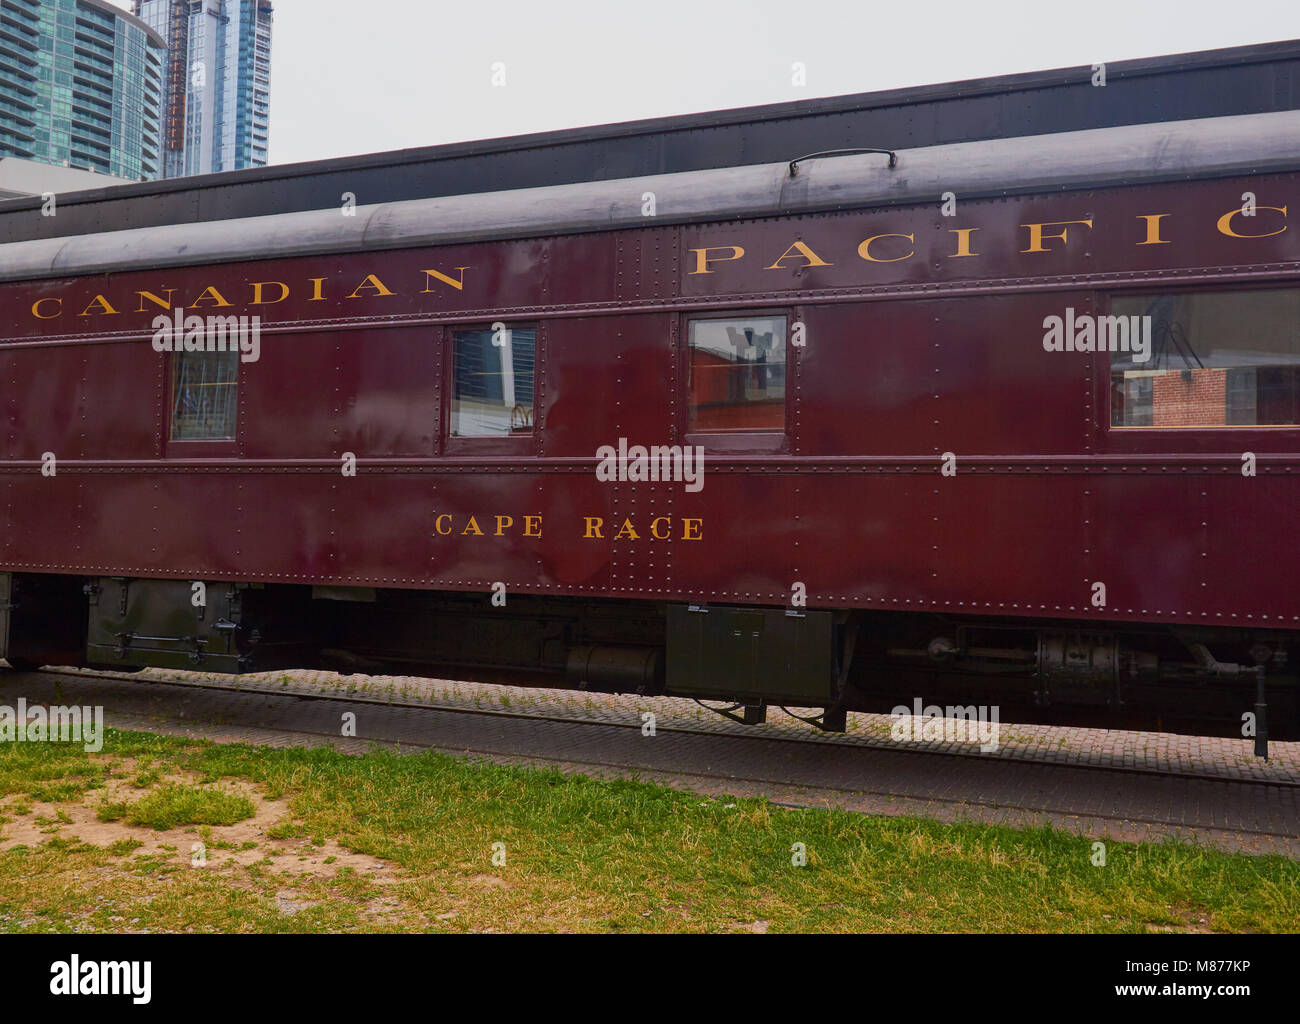 Canadian Pacific Cape Race train carriage, Toronto Railway Museum, John Street Roundhouse, downtown Toronto, Ontario, Canada. Stock Photo